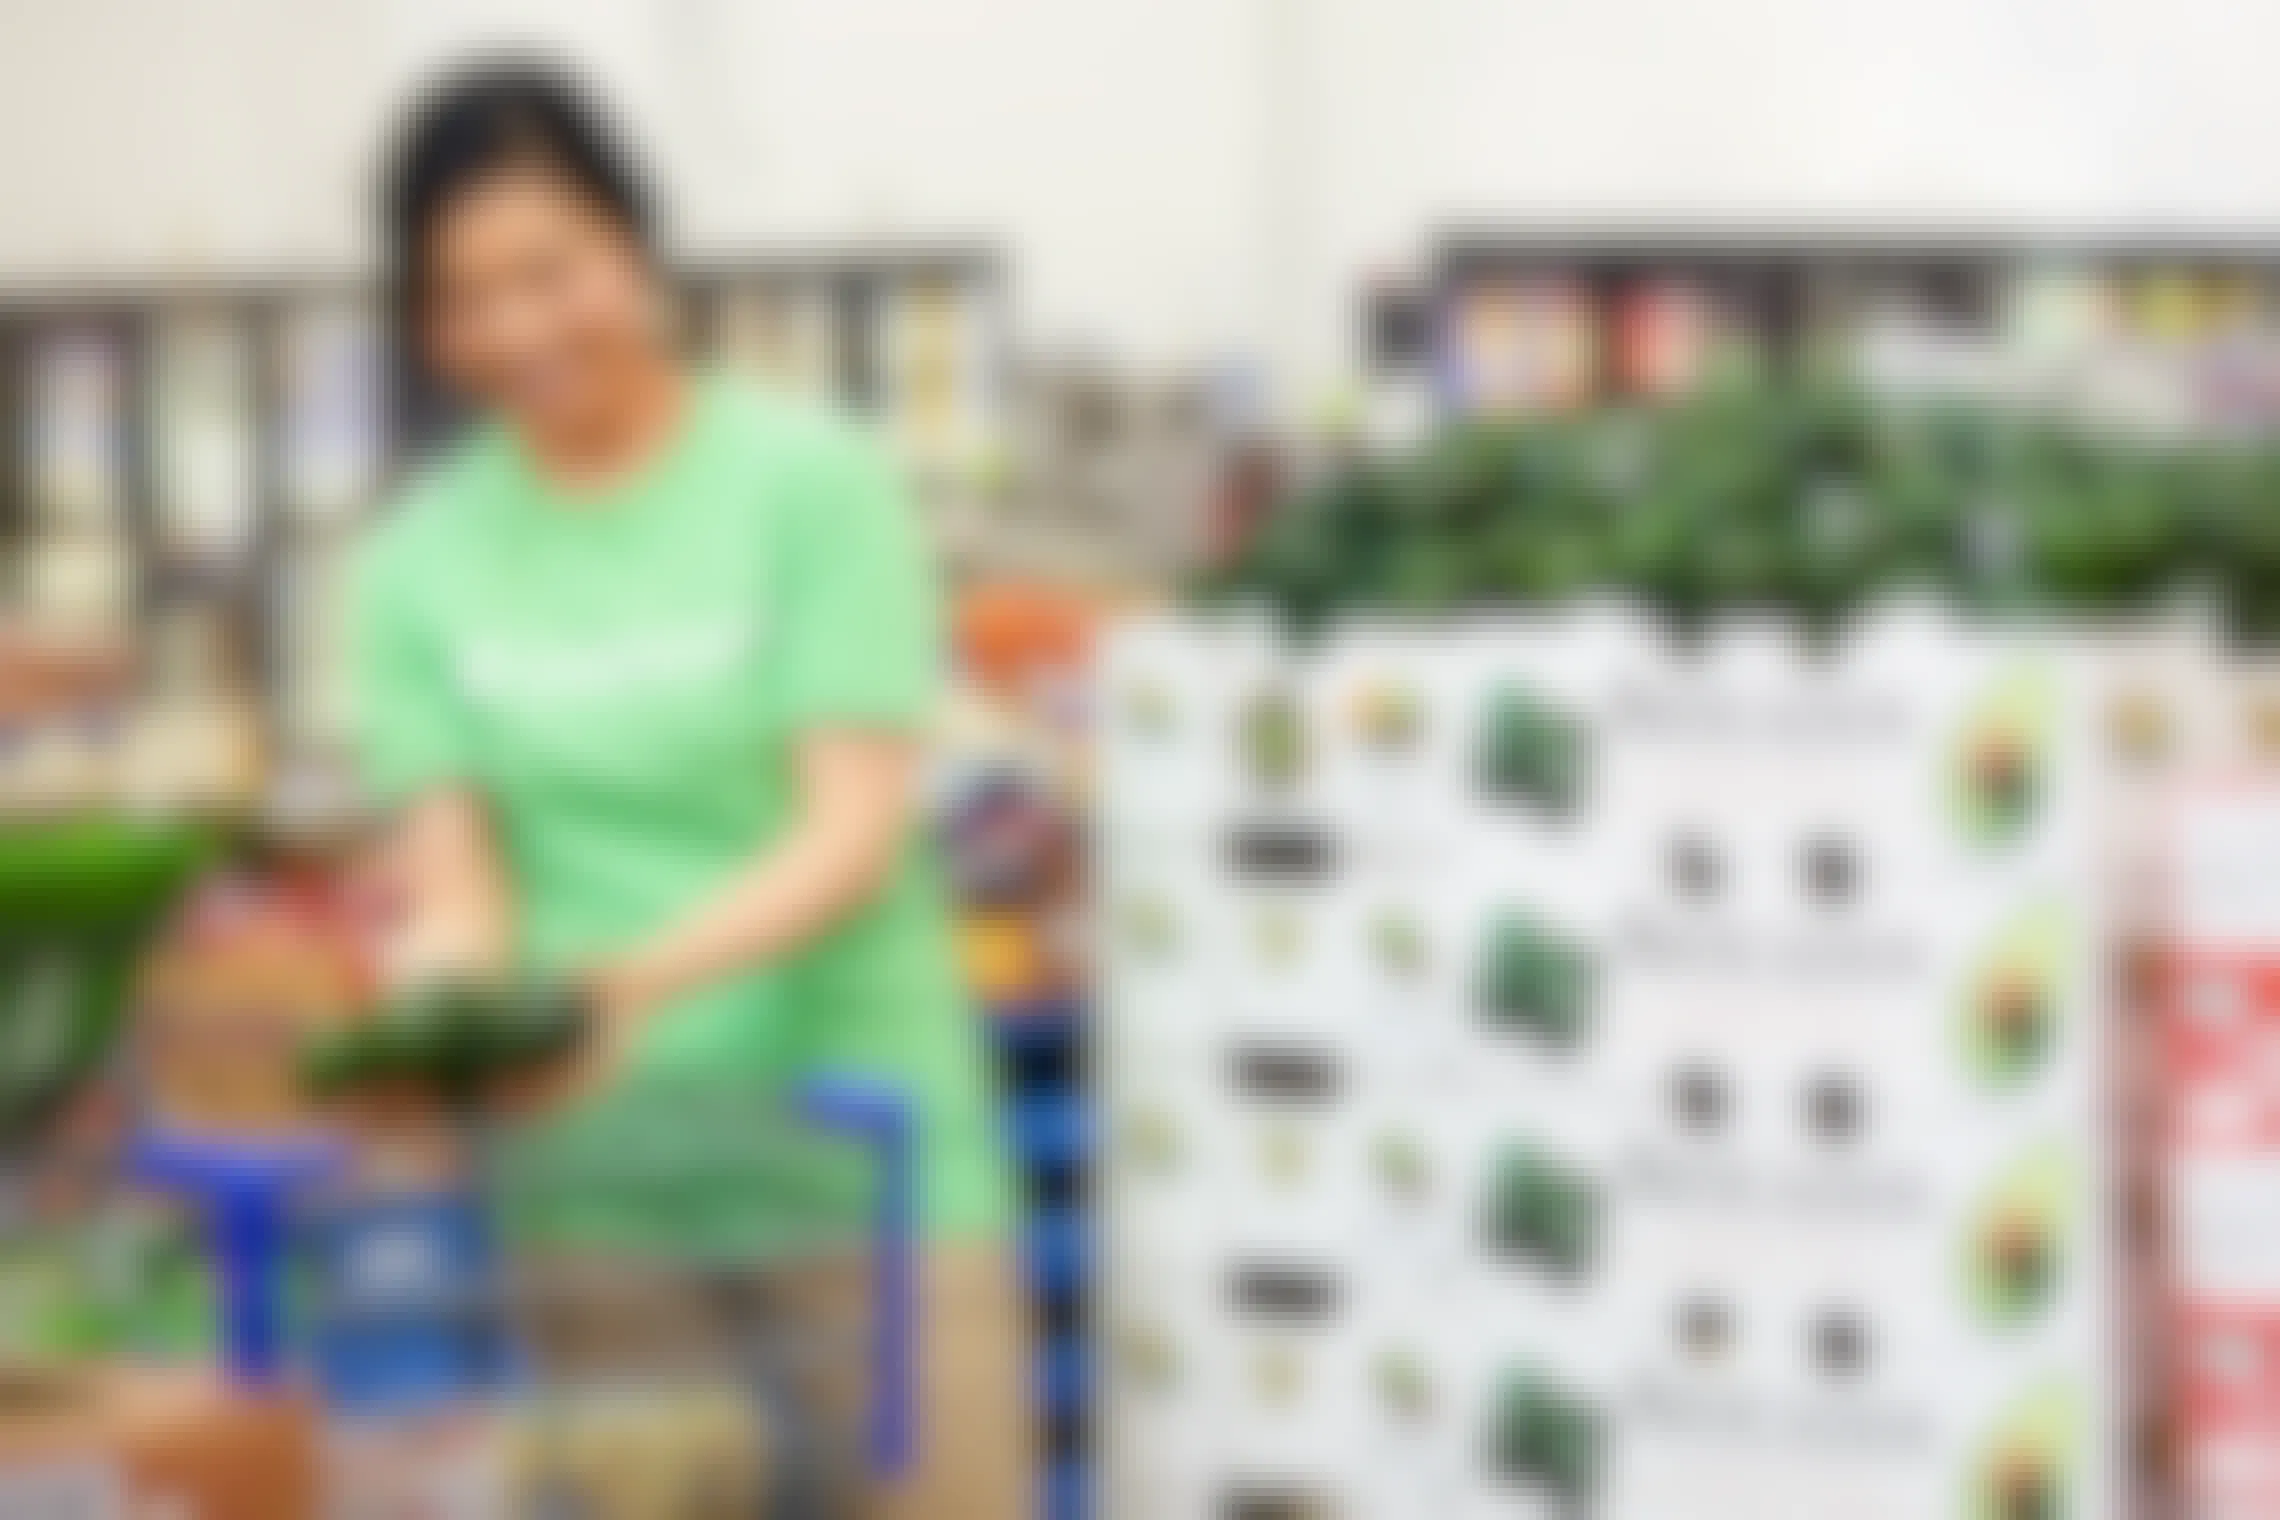 A woman in an Instacart shirt, putting avocados in a shopping cart inside Sam's Club